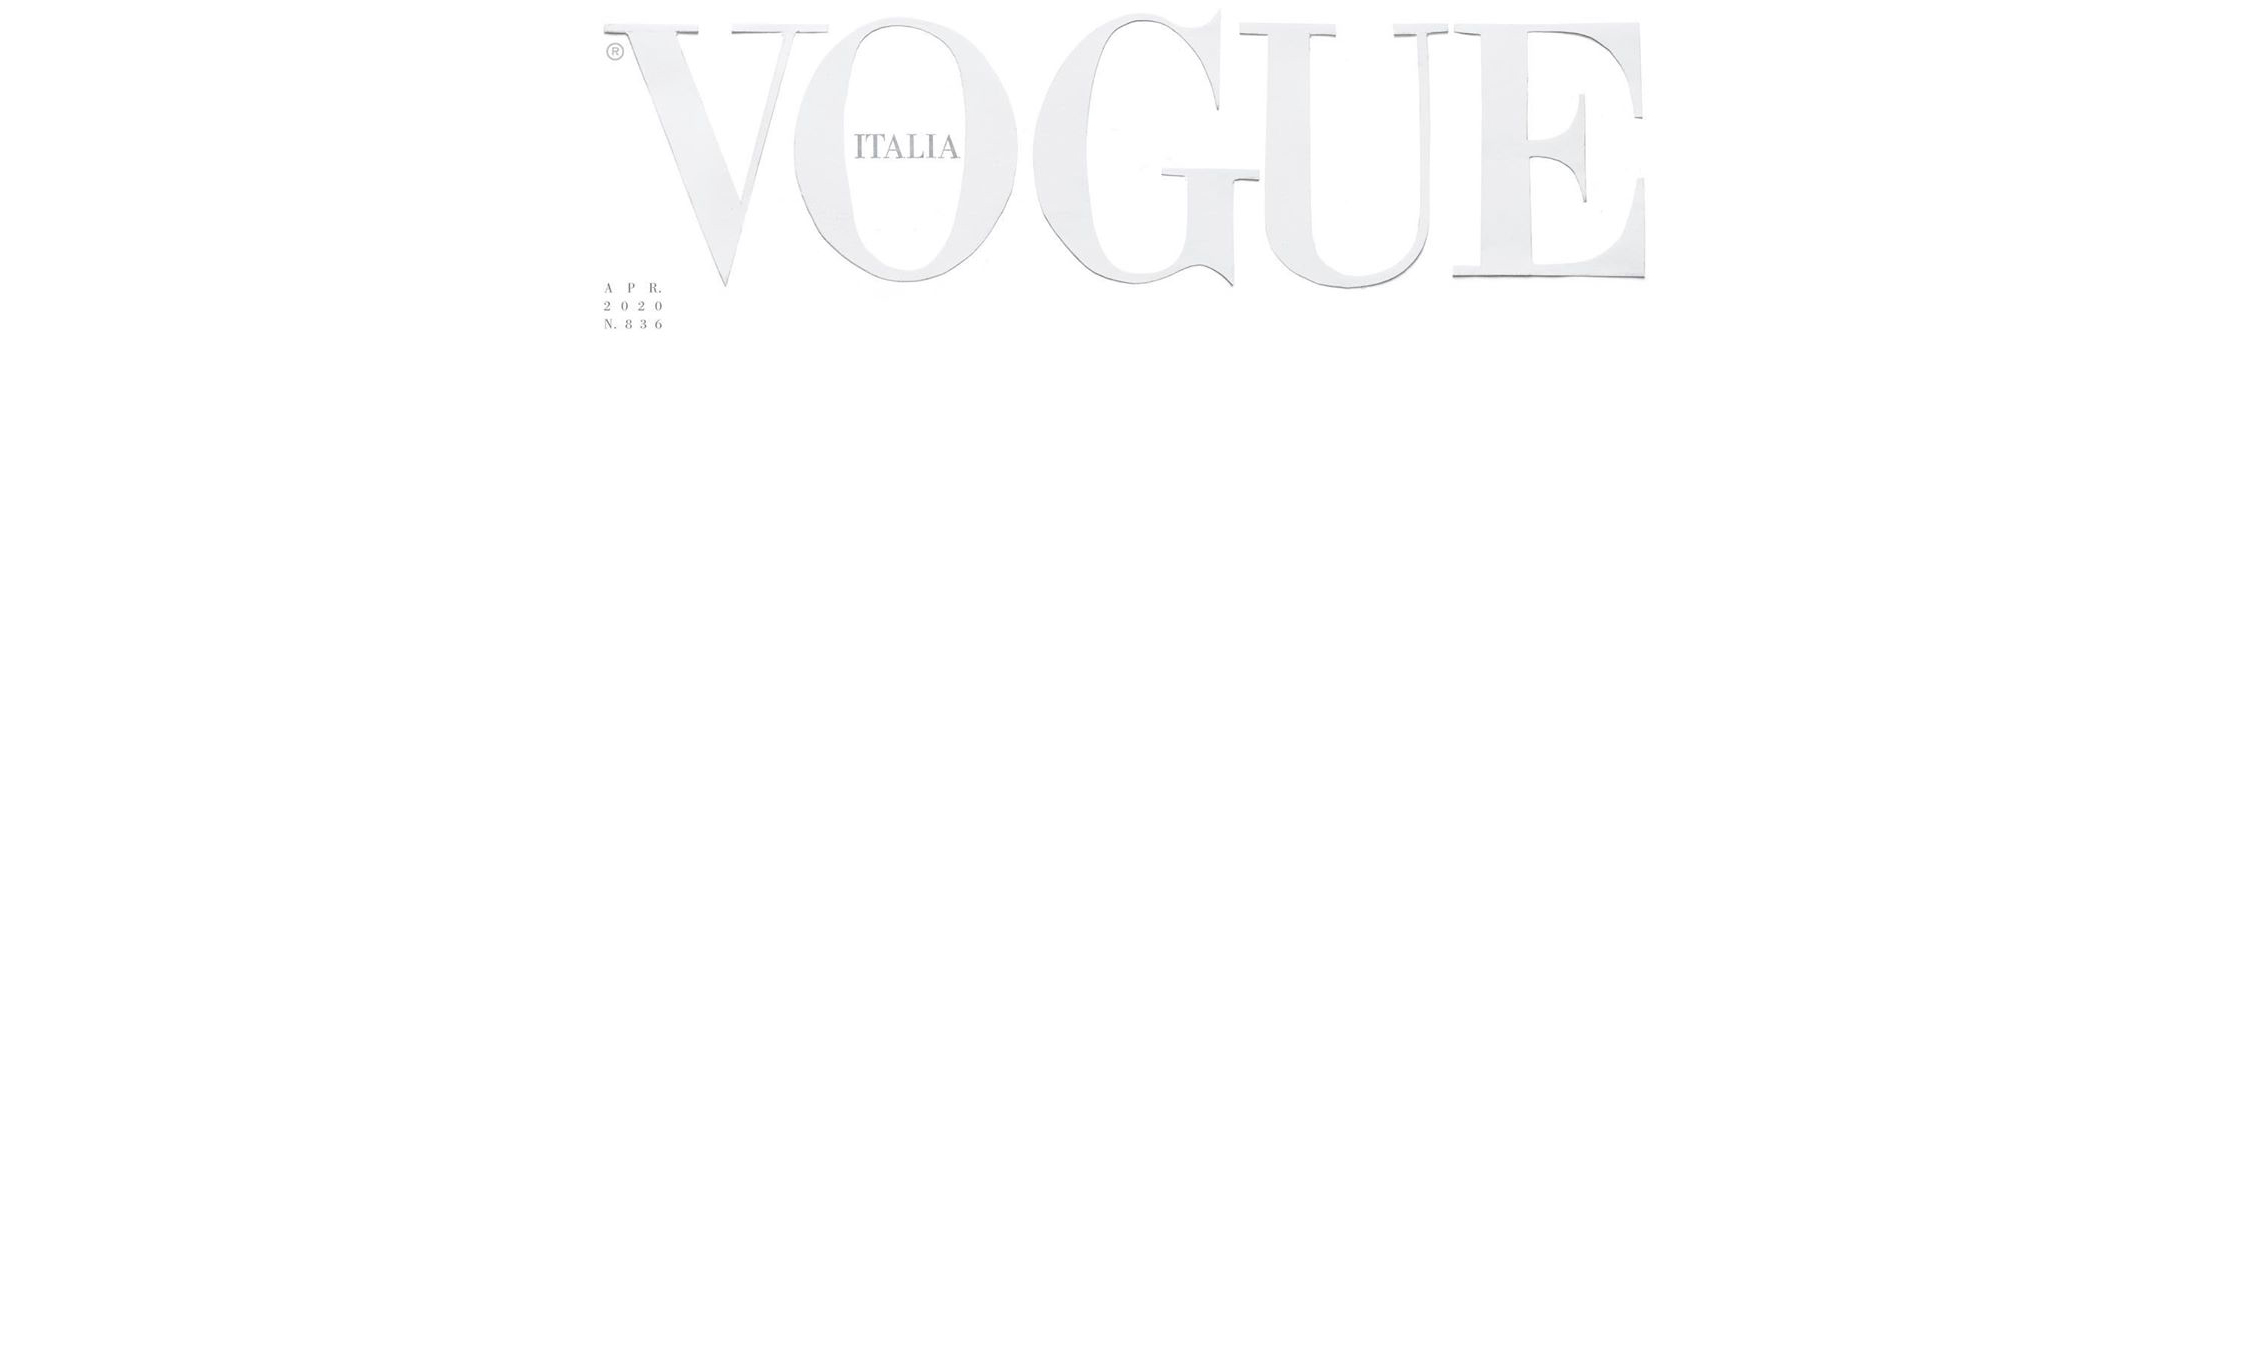 《VOGUE》意大利 4 月刊将使用纯白色封面